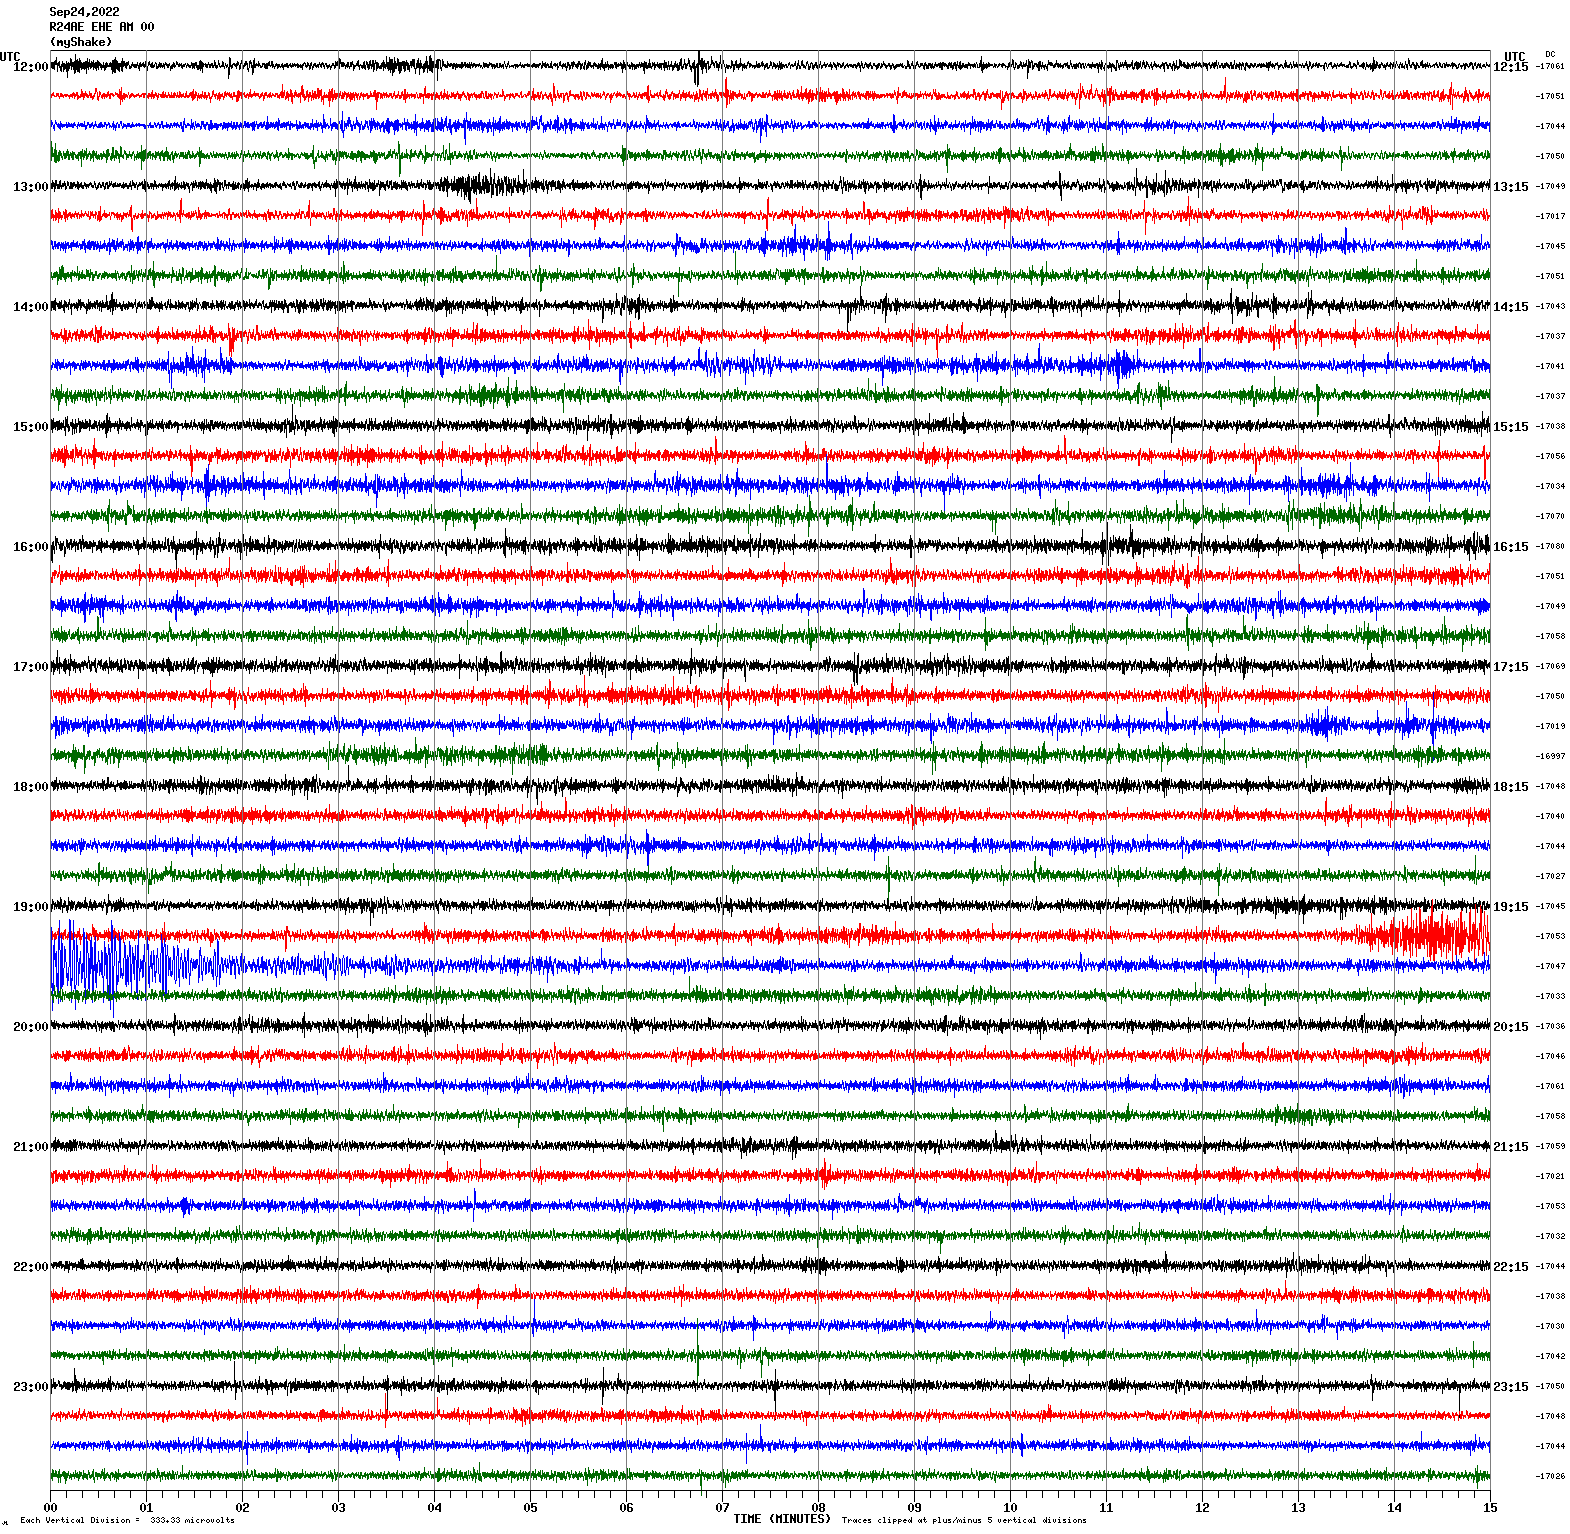 /seismic-data/R24AE/R24AE_EHE_AM_00.2022092412.gif